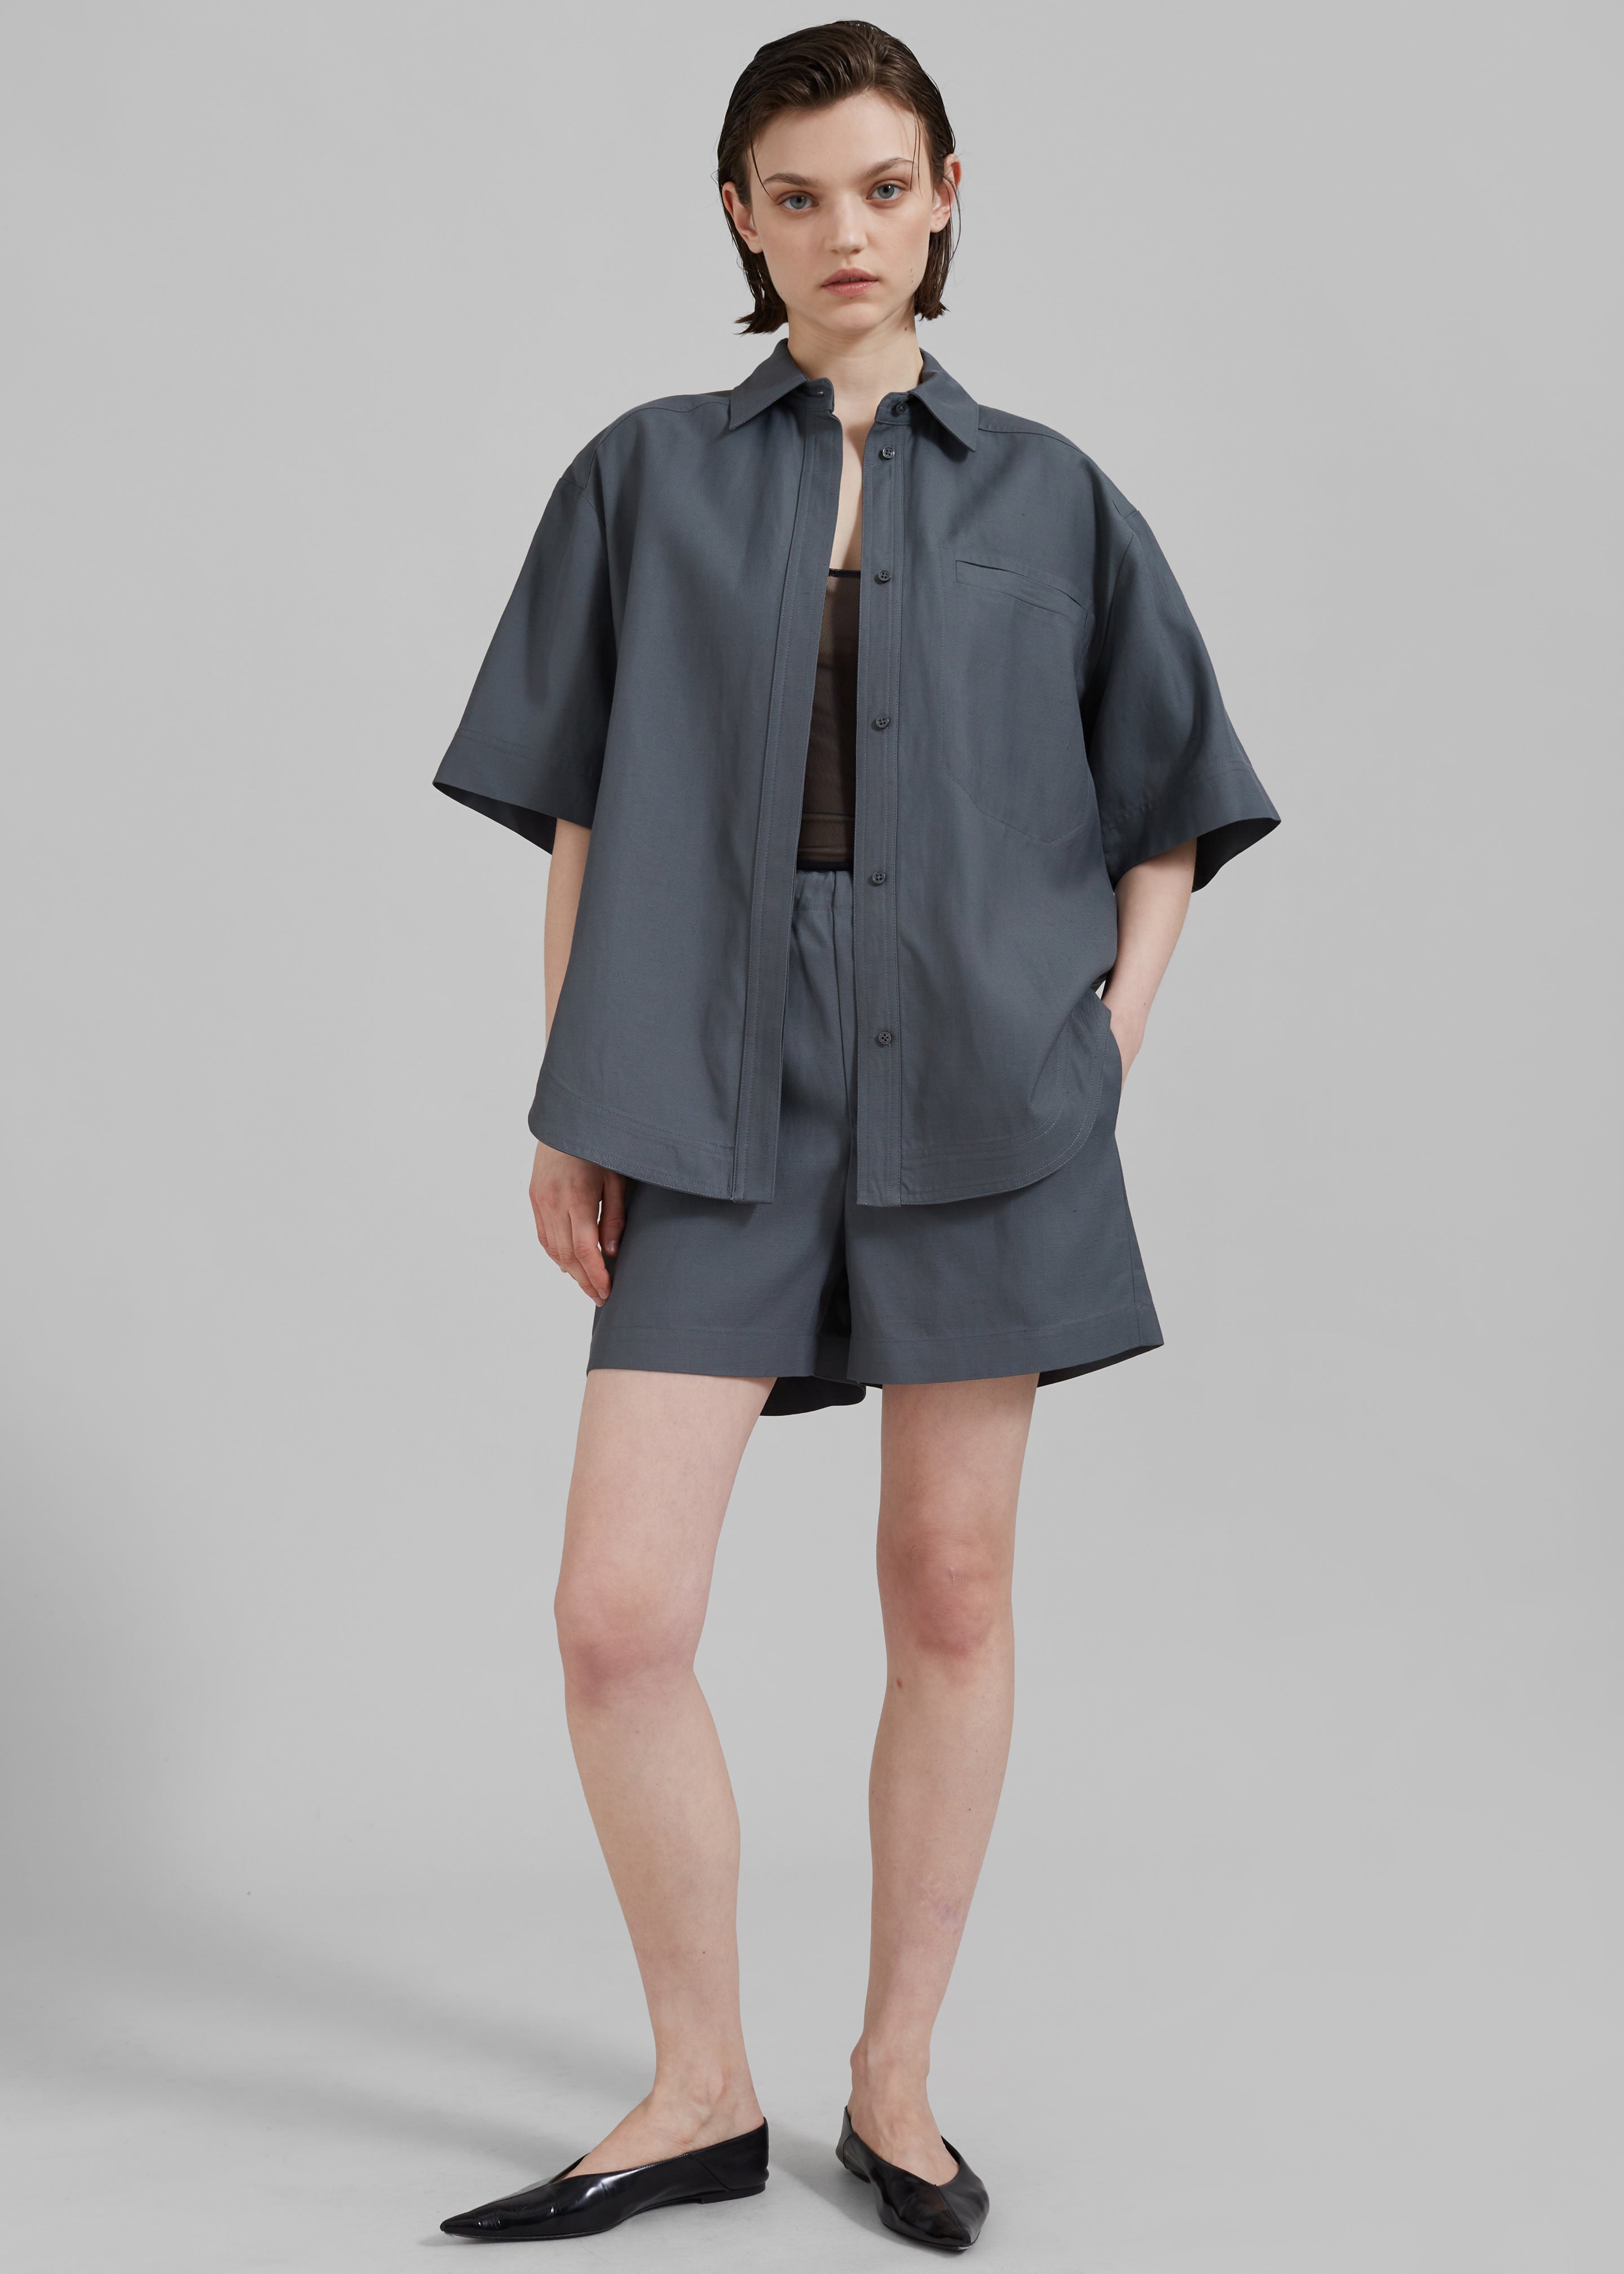 Loulou Studio Moheli Short Sleeve Shirt - Fjord Grey - 6